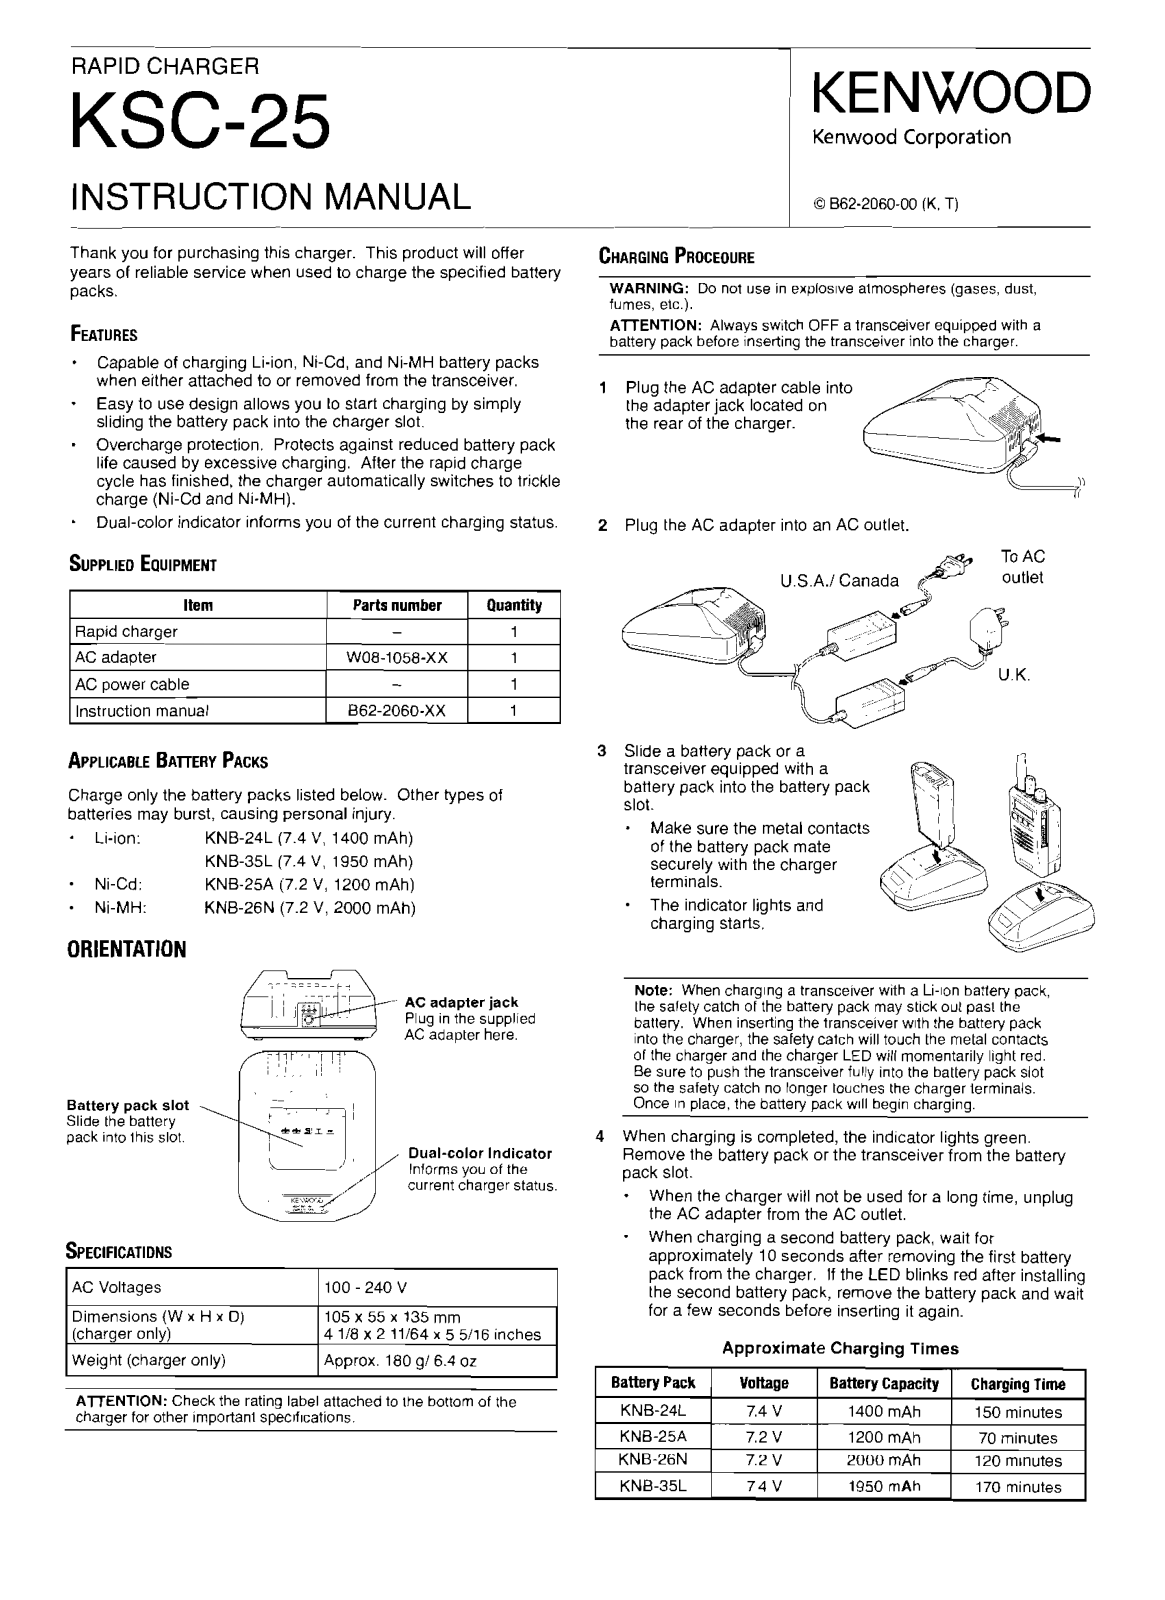 KENWOOD KSC-25 User Manual